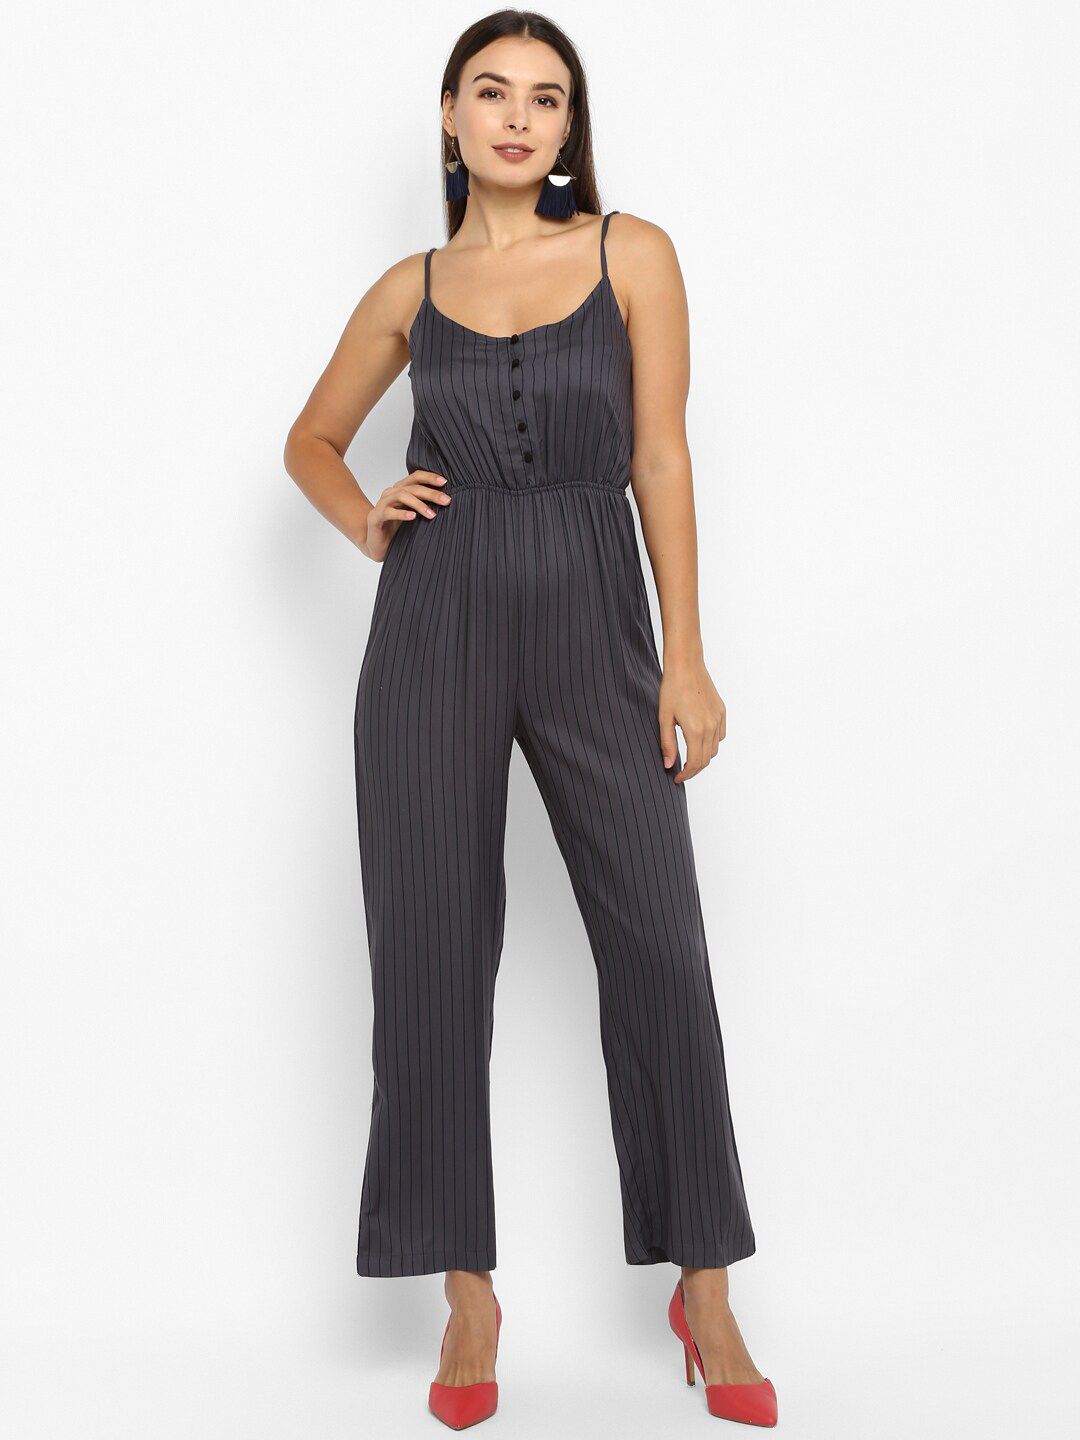 DEEBACO Women Grey & Black Striped Cotton Culotte Jumpsuit Price in India